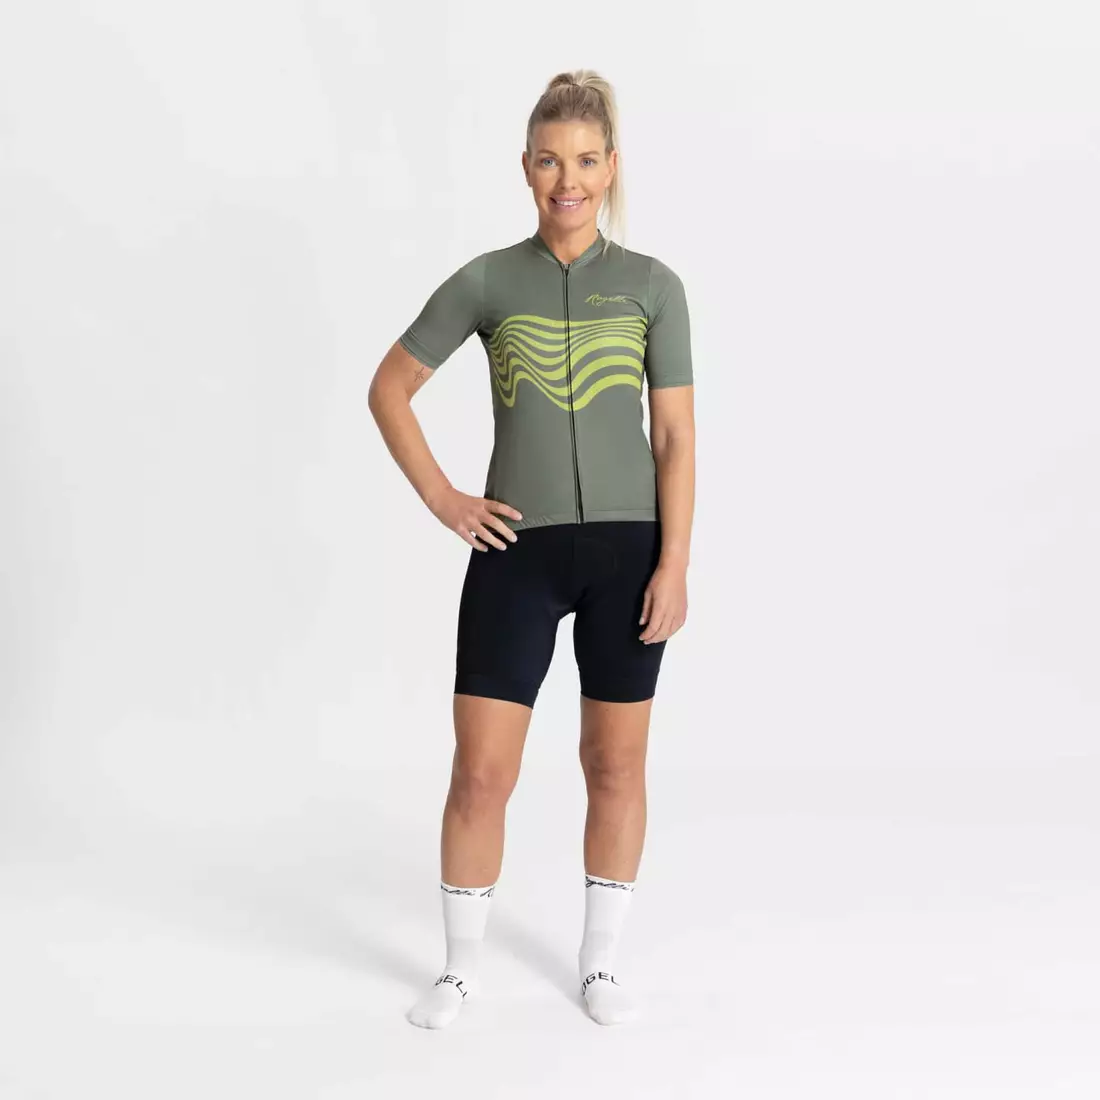 Rogelli DIAGA dámský cyklistický dres, zeleno-zlatá